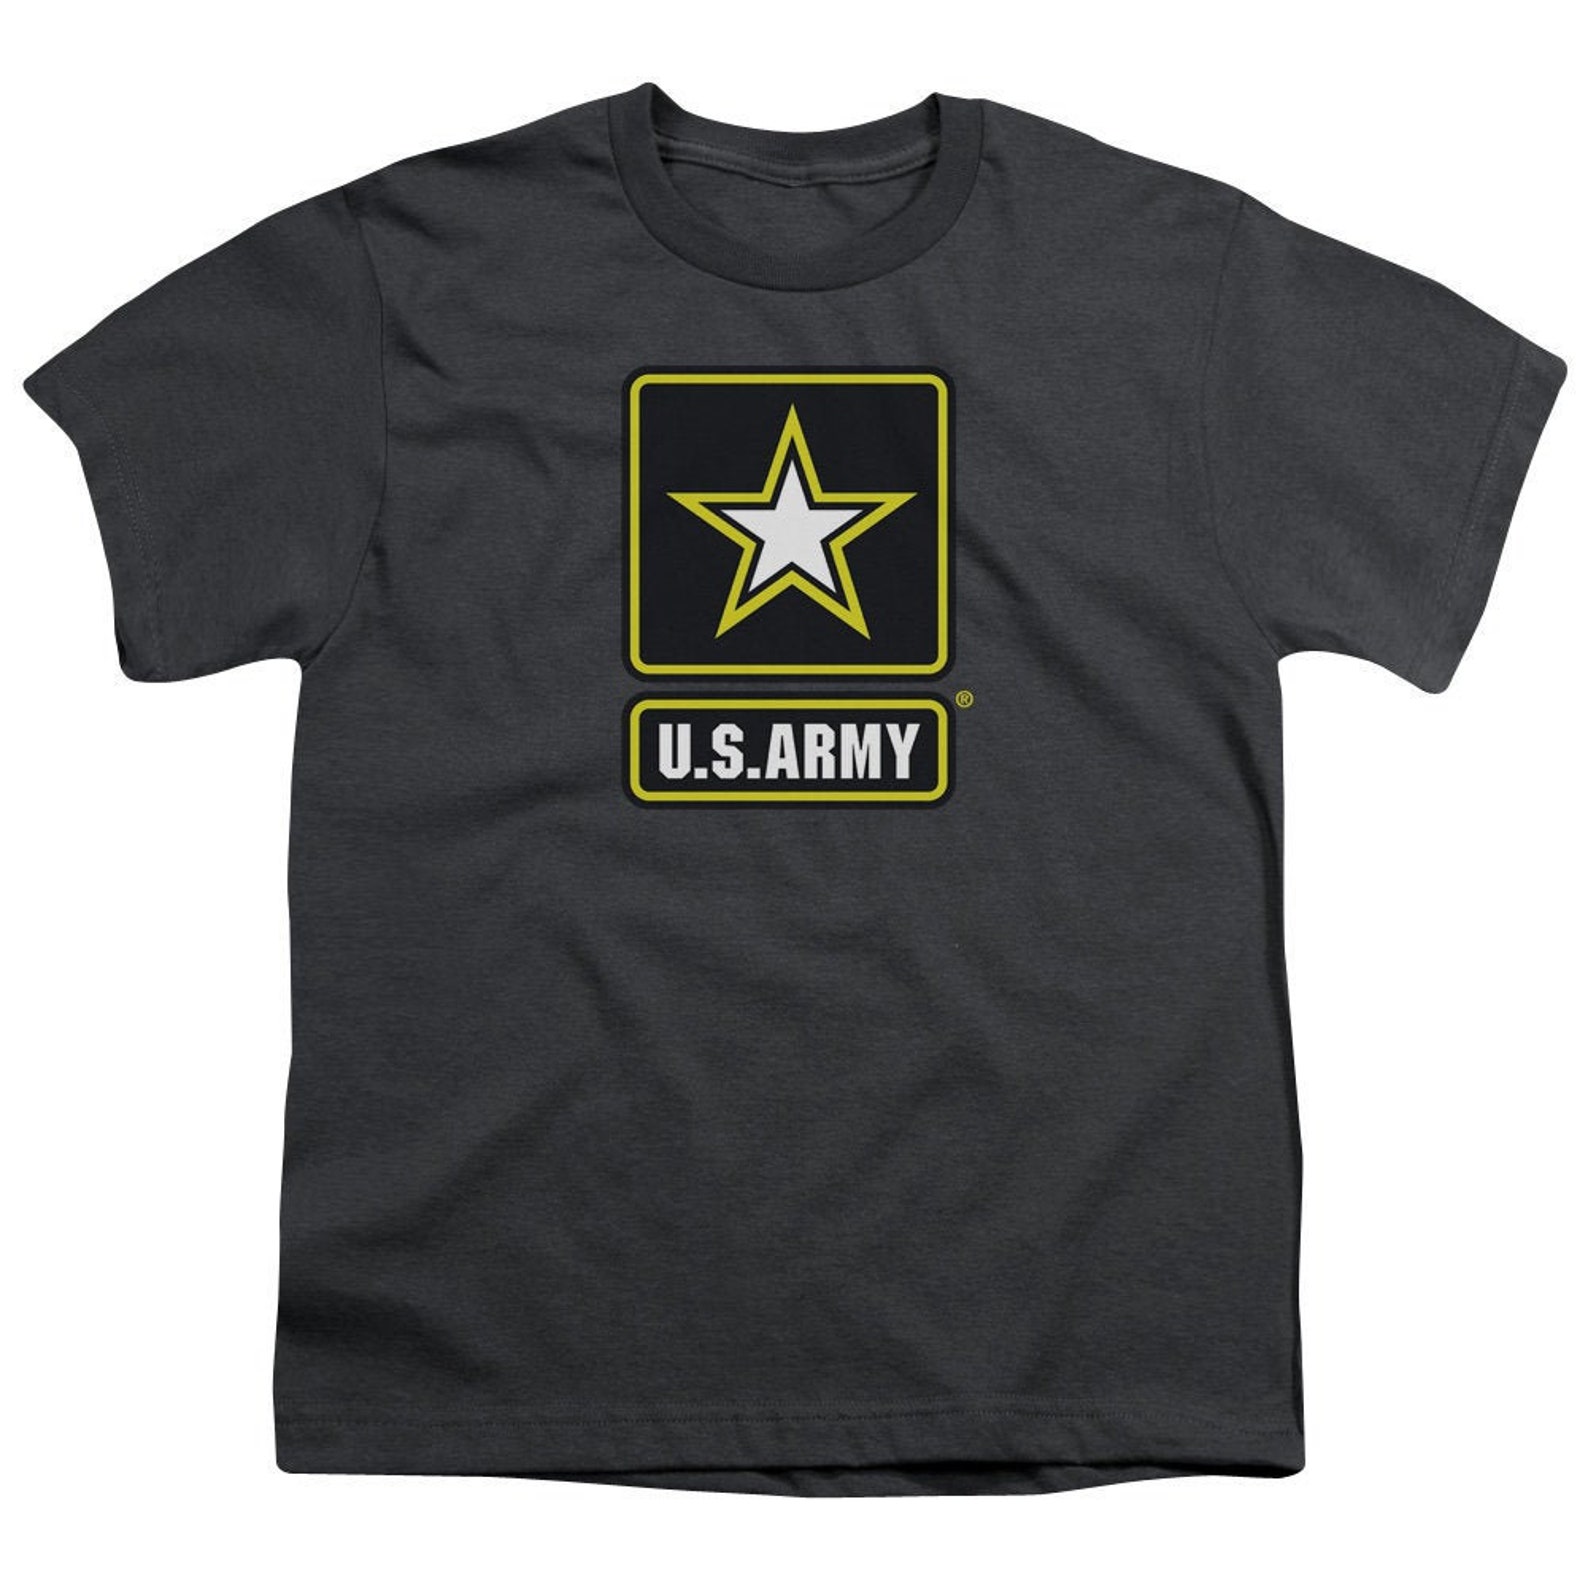 U.S. Army Logo Kid's Charcoal T-Shirts | Etsy